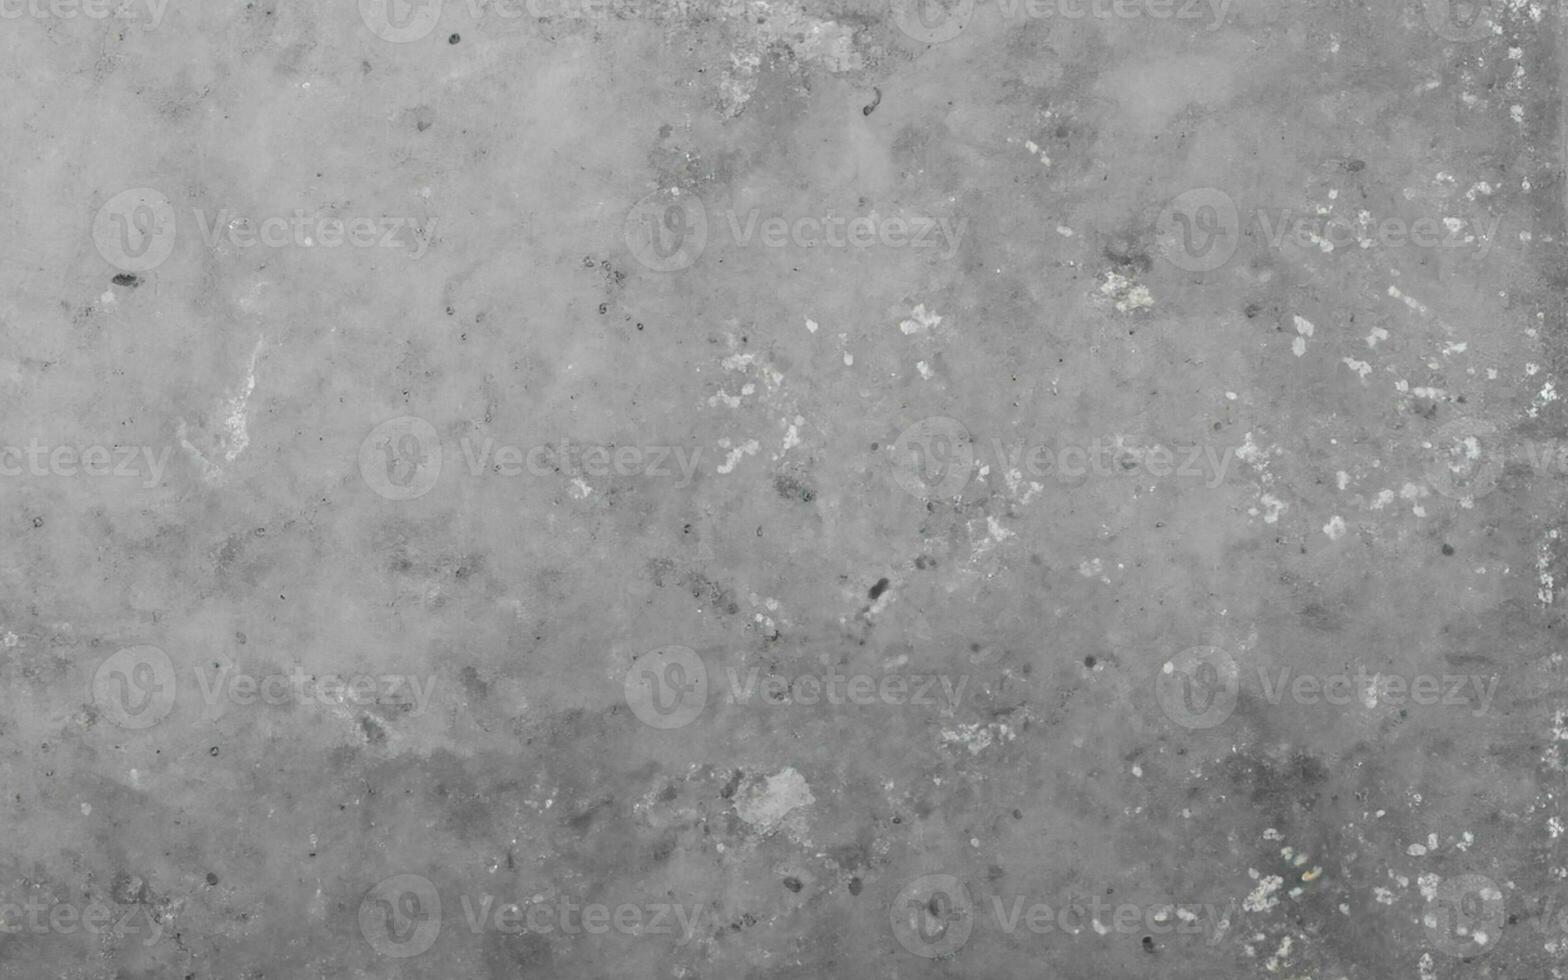 mörk betong textur bakgrund foto